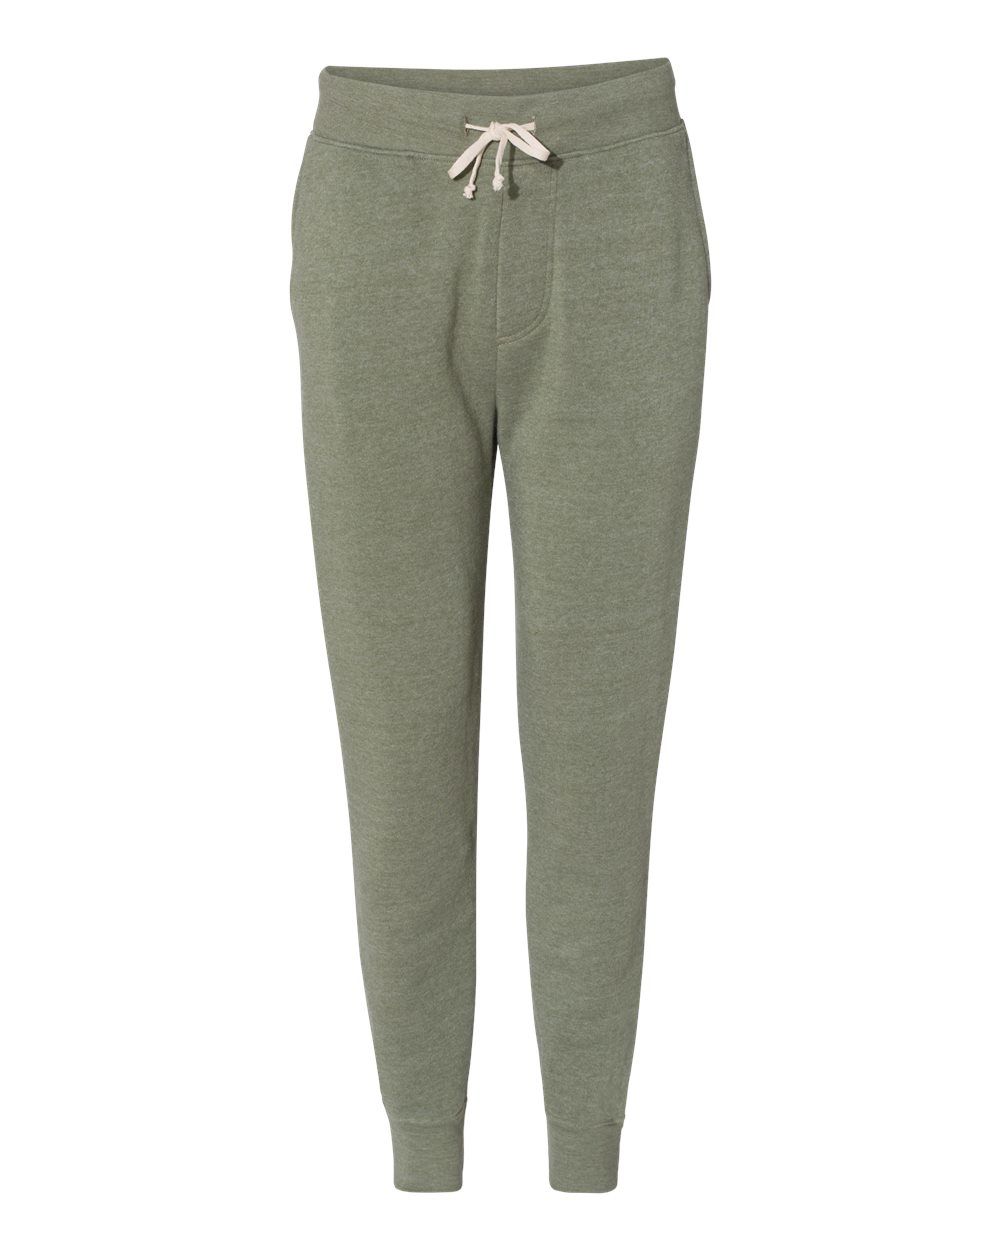 Custom Branded Alternative Pants - Eco True Army Green